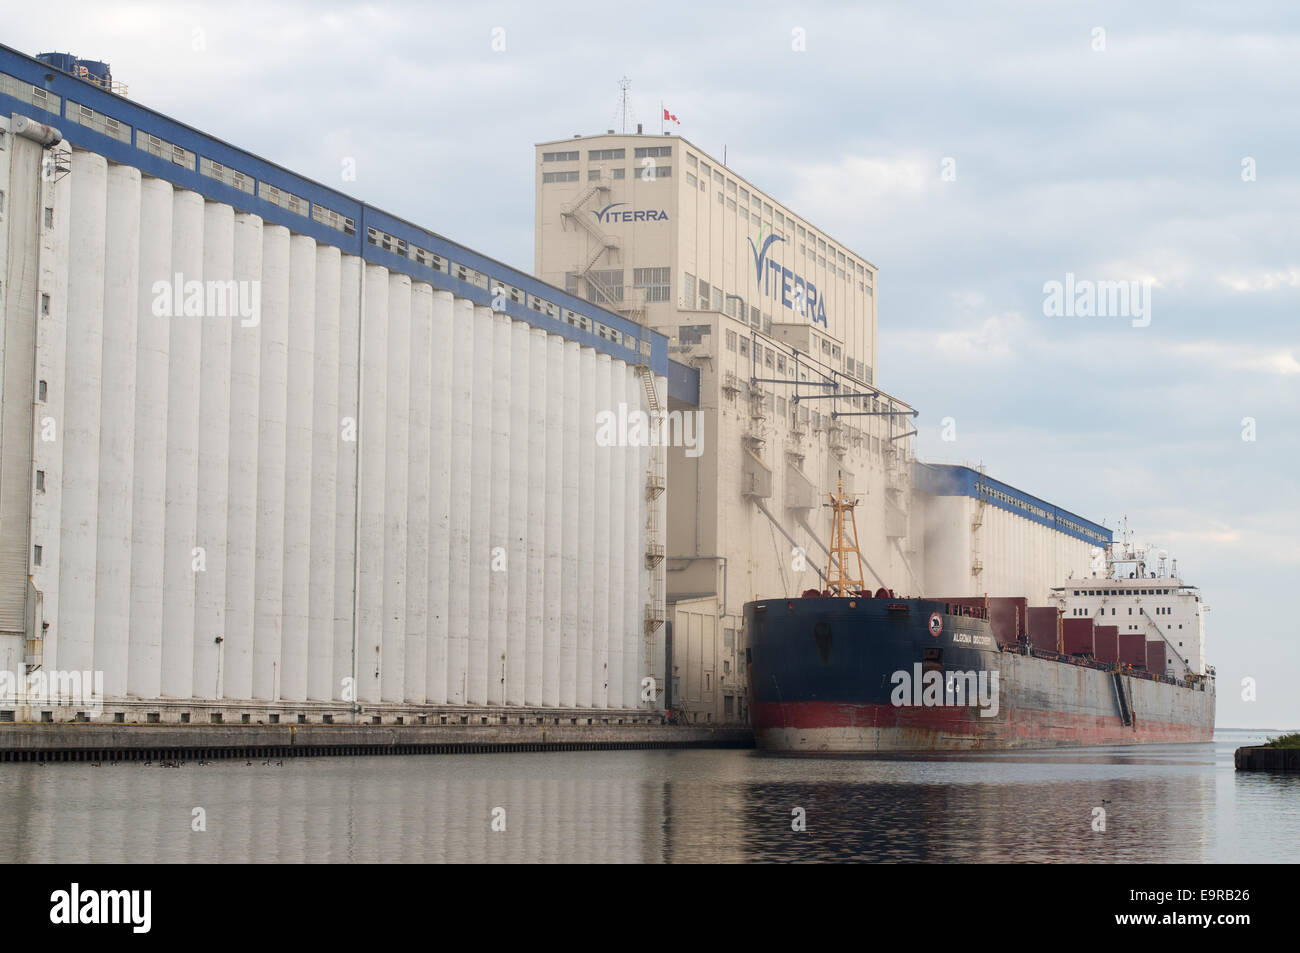 Bulk carrier Algoma Discovery loading grain at the Viterra silo, Thunder Bay, Ontario, Canada. Stock Photo